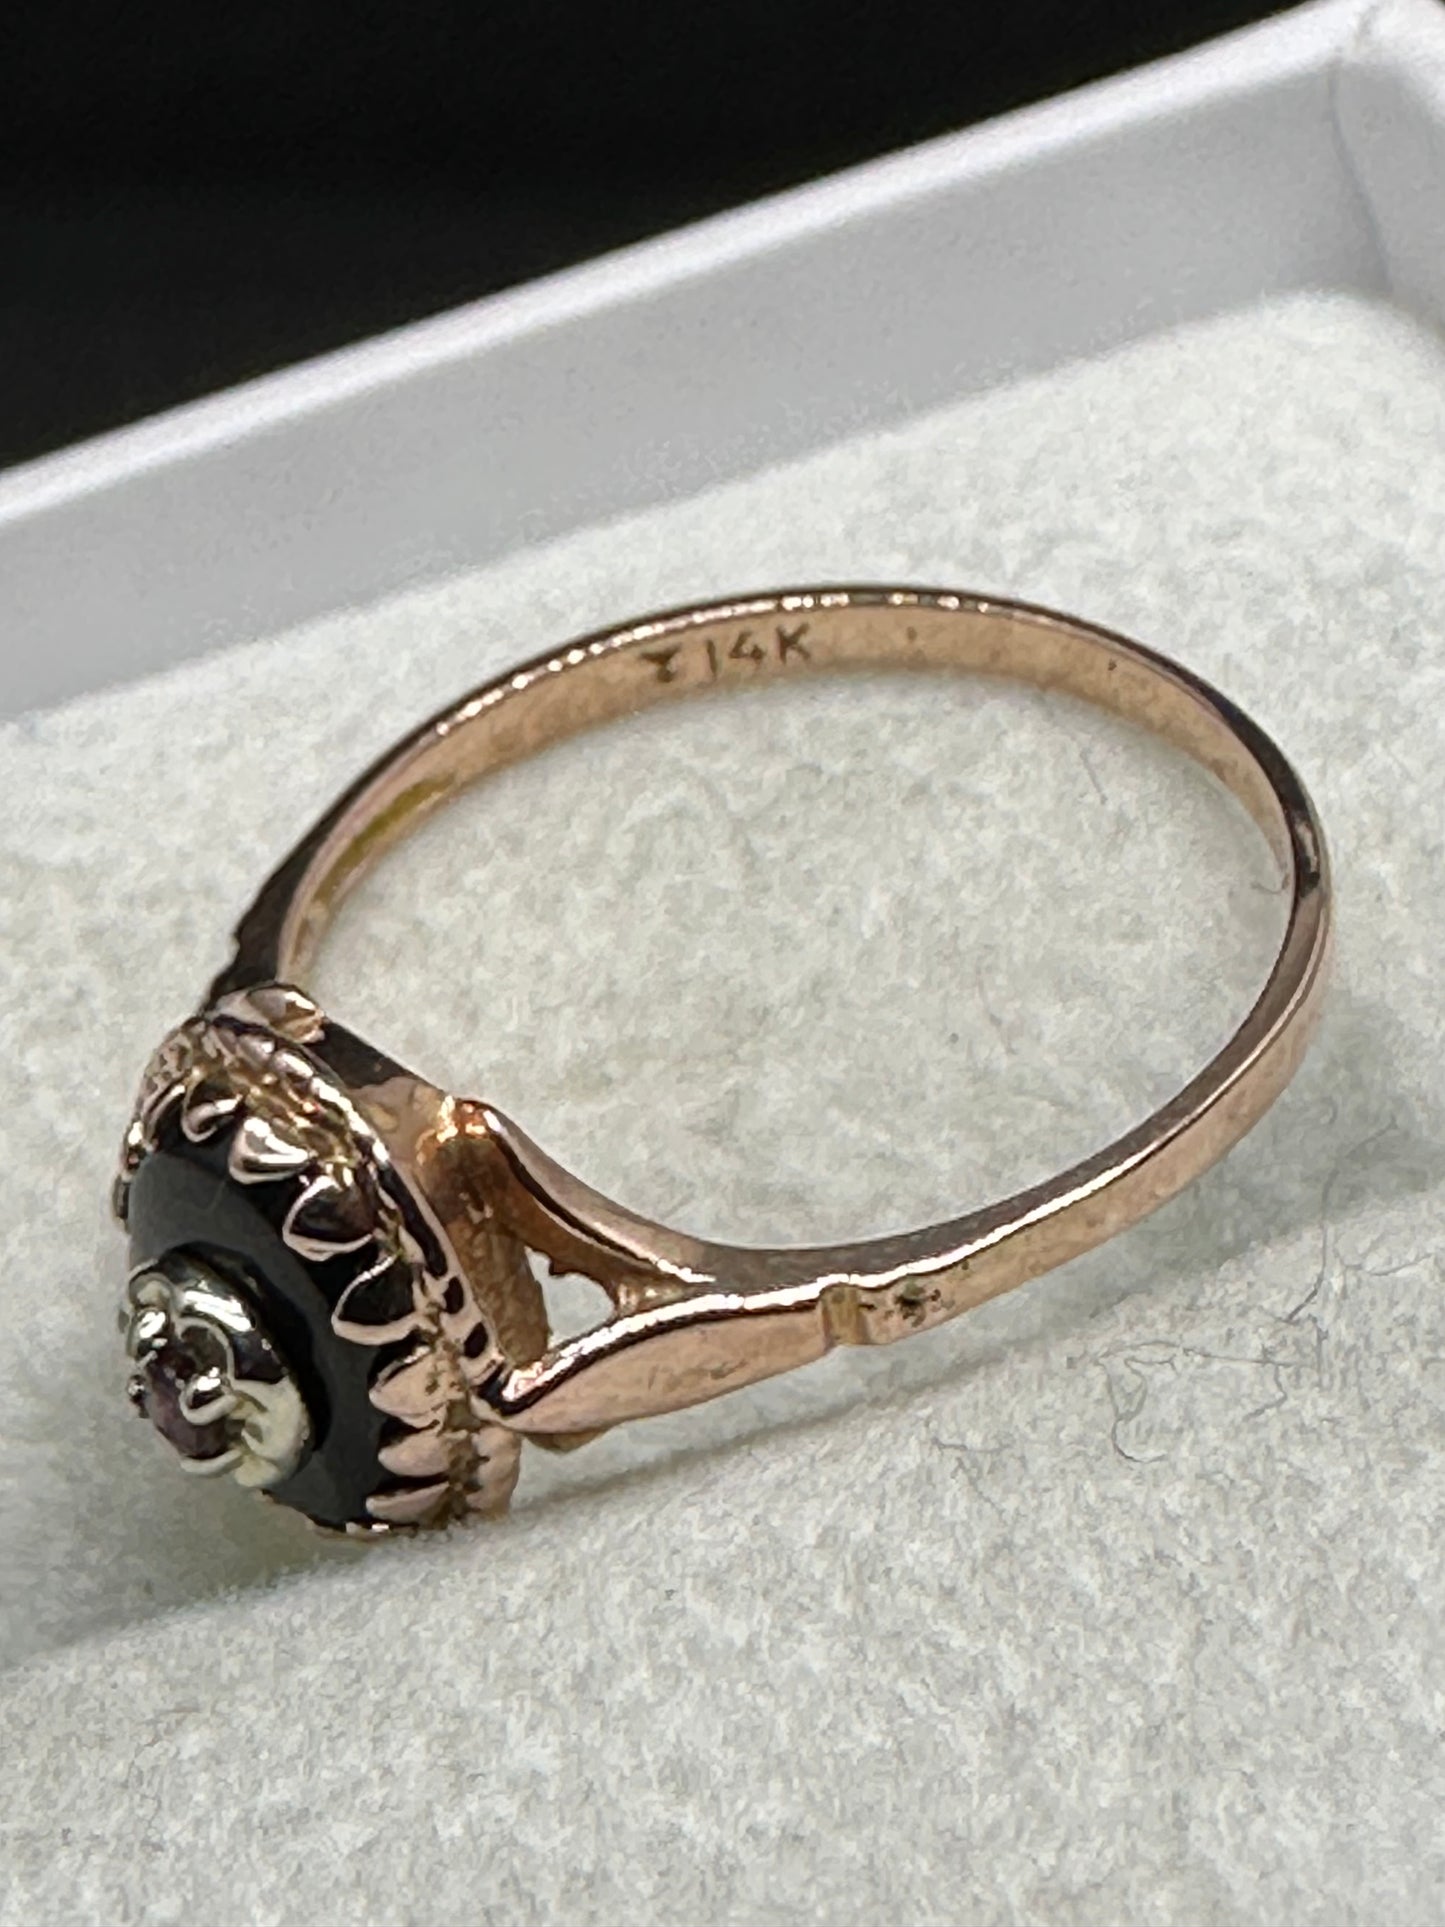 Antique Victorian Edwardian 14K Rose Gold Ornate Onyx & Ruby Mourning Ring Marked TZ or ZT Size 6